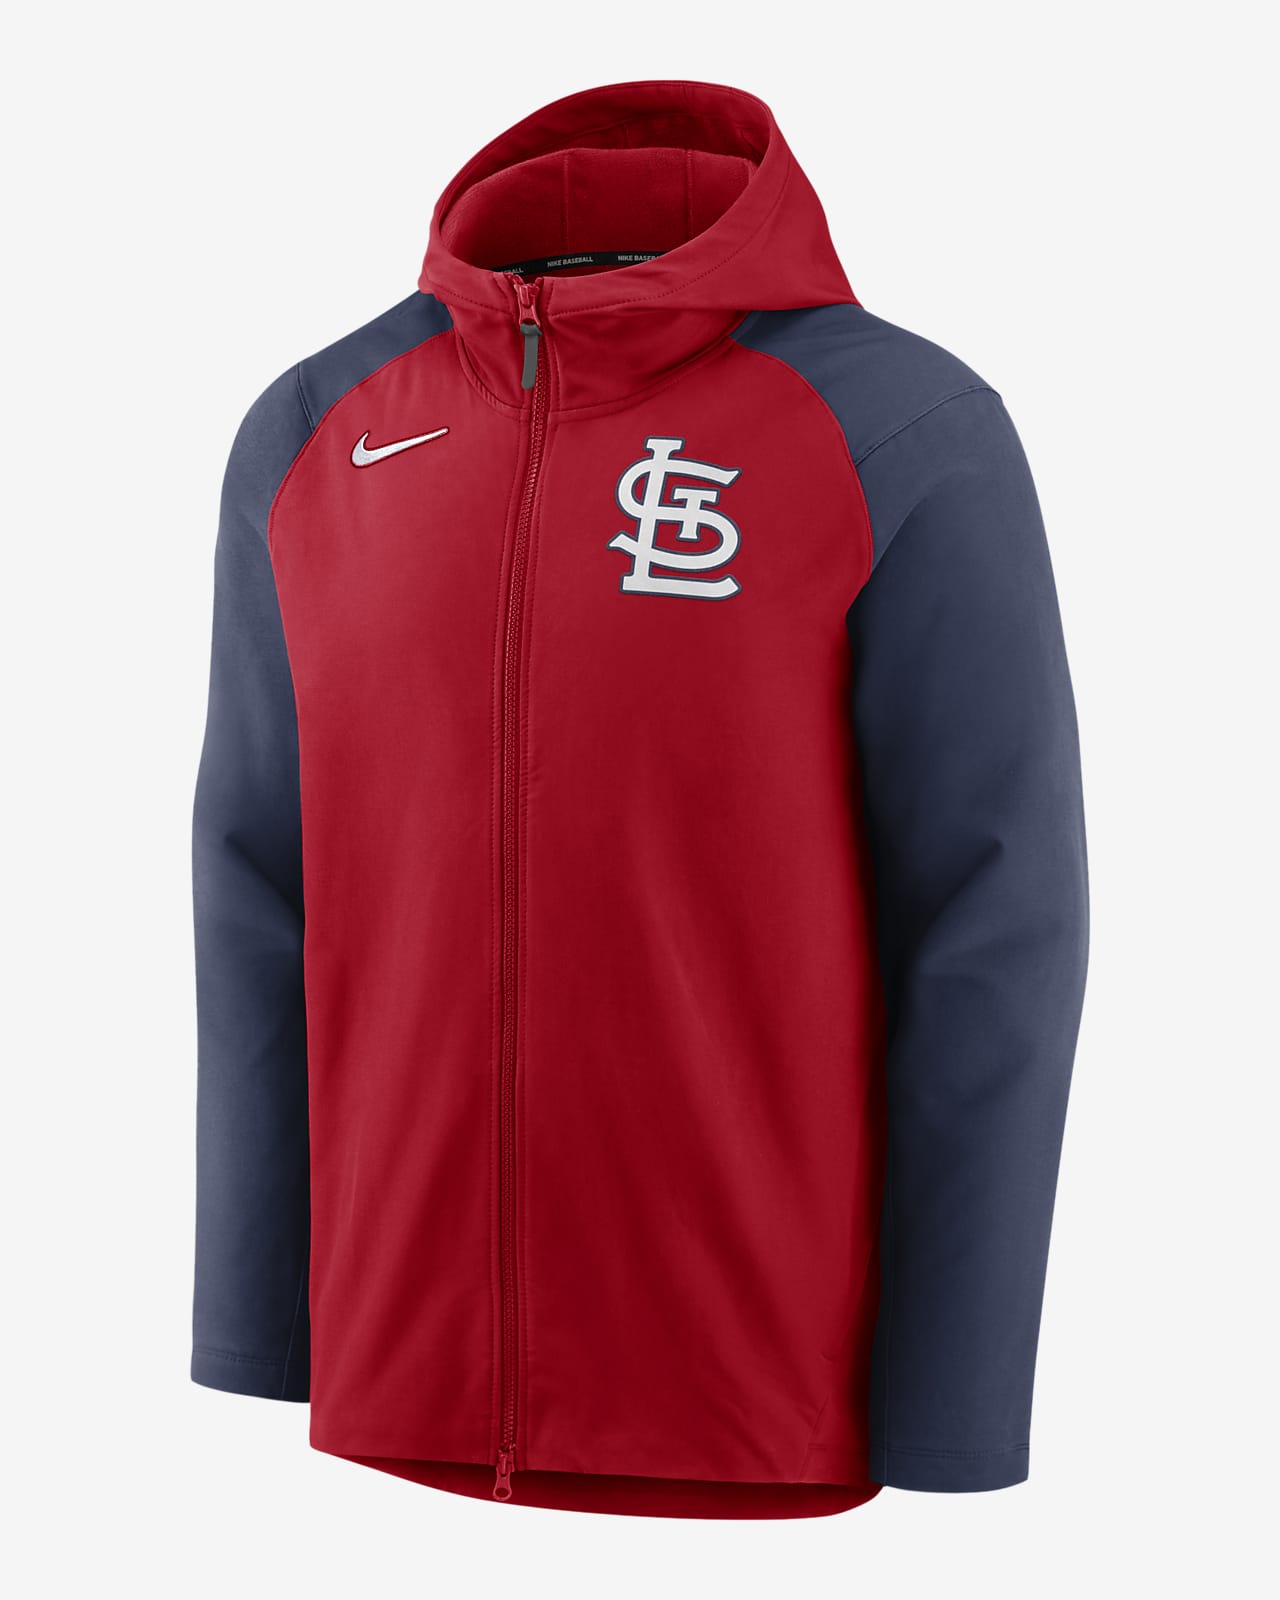 Nike Therma Player (MLB St. Louis Cardinals) Men's Full-Zip Jacket